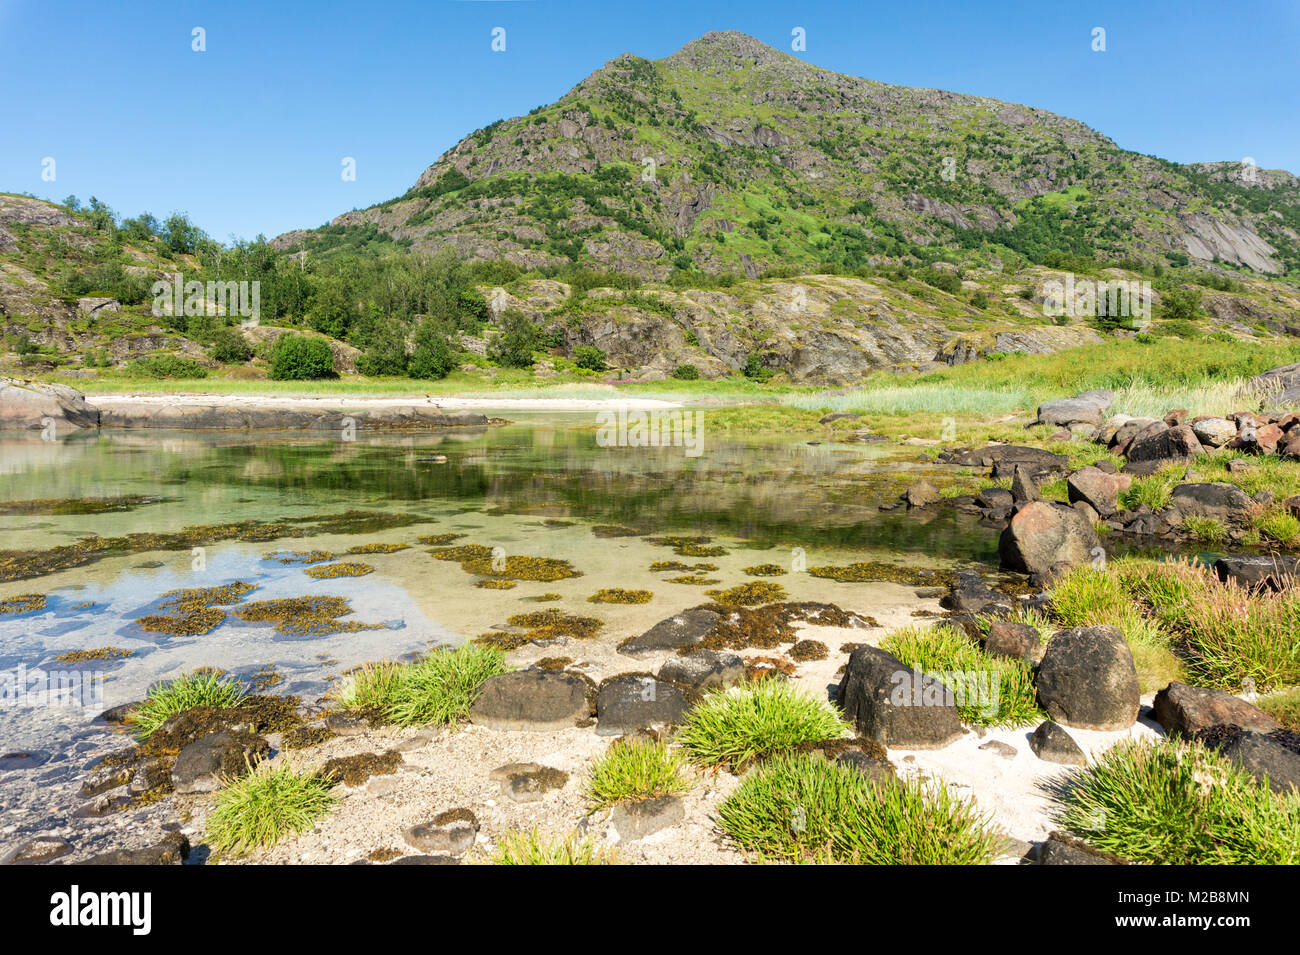 L'acqua turchese, verdi colline e pietre, arcipelago delle Lofoten, Norvegia, Arsteinen isola Foto Stock